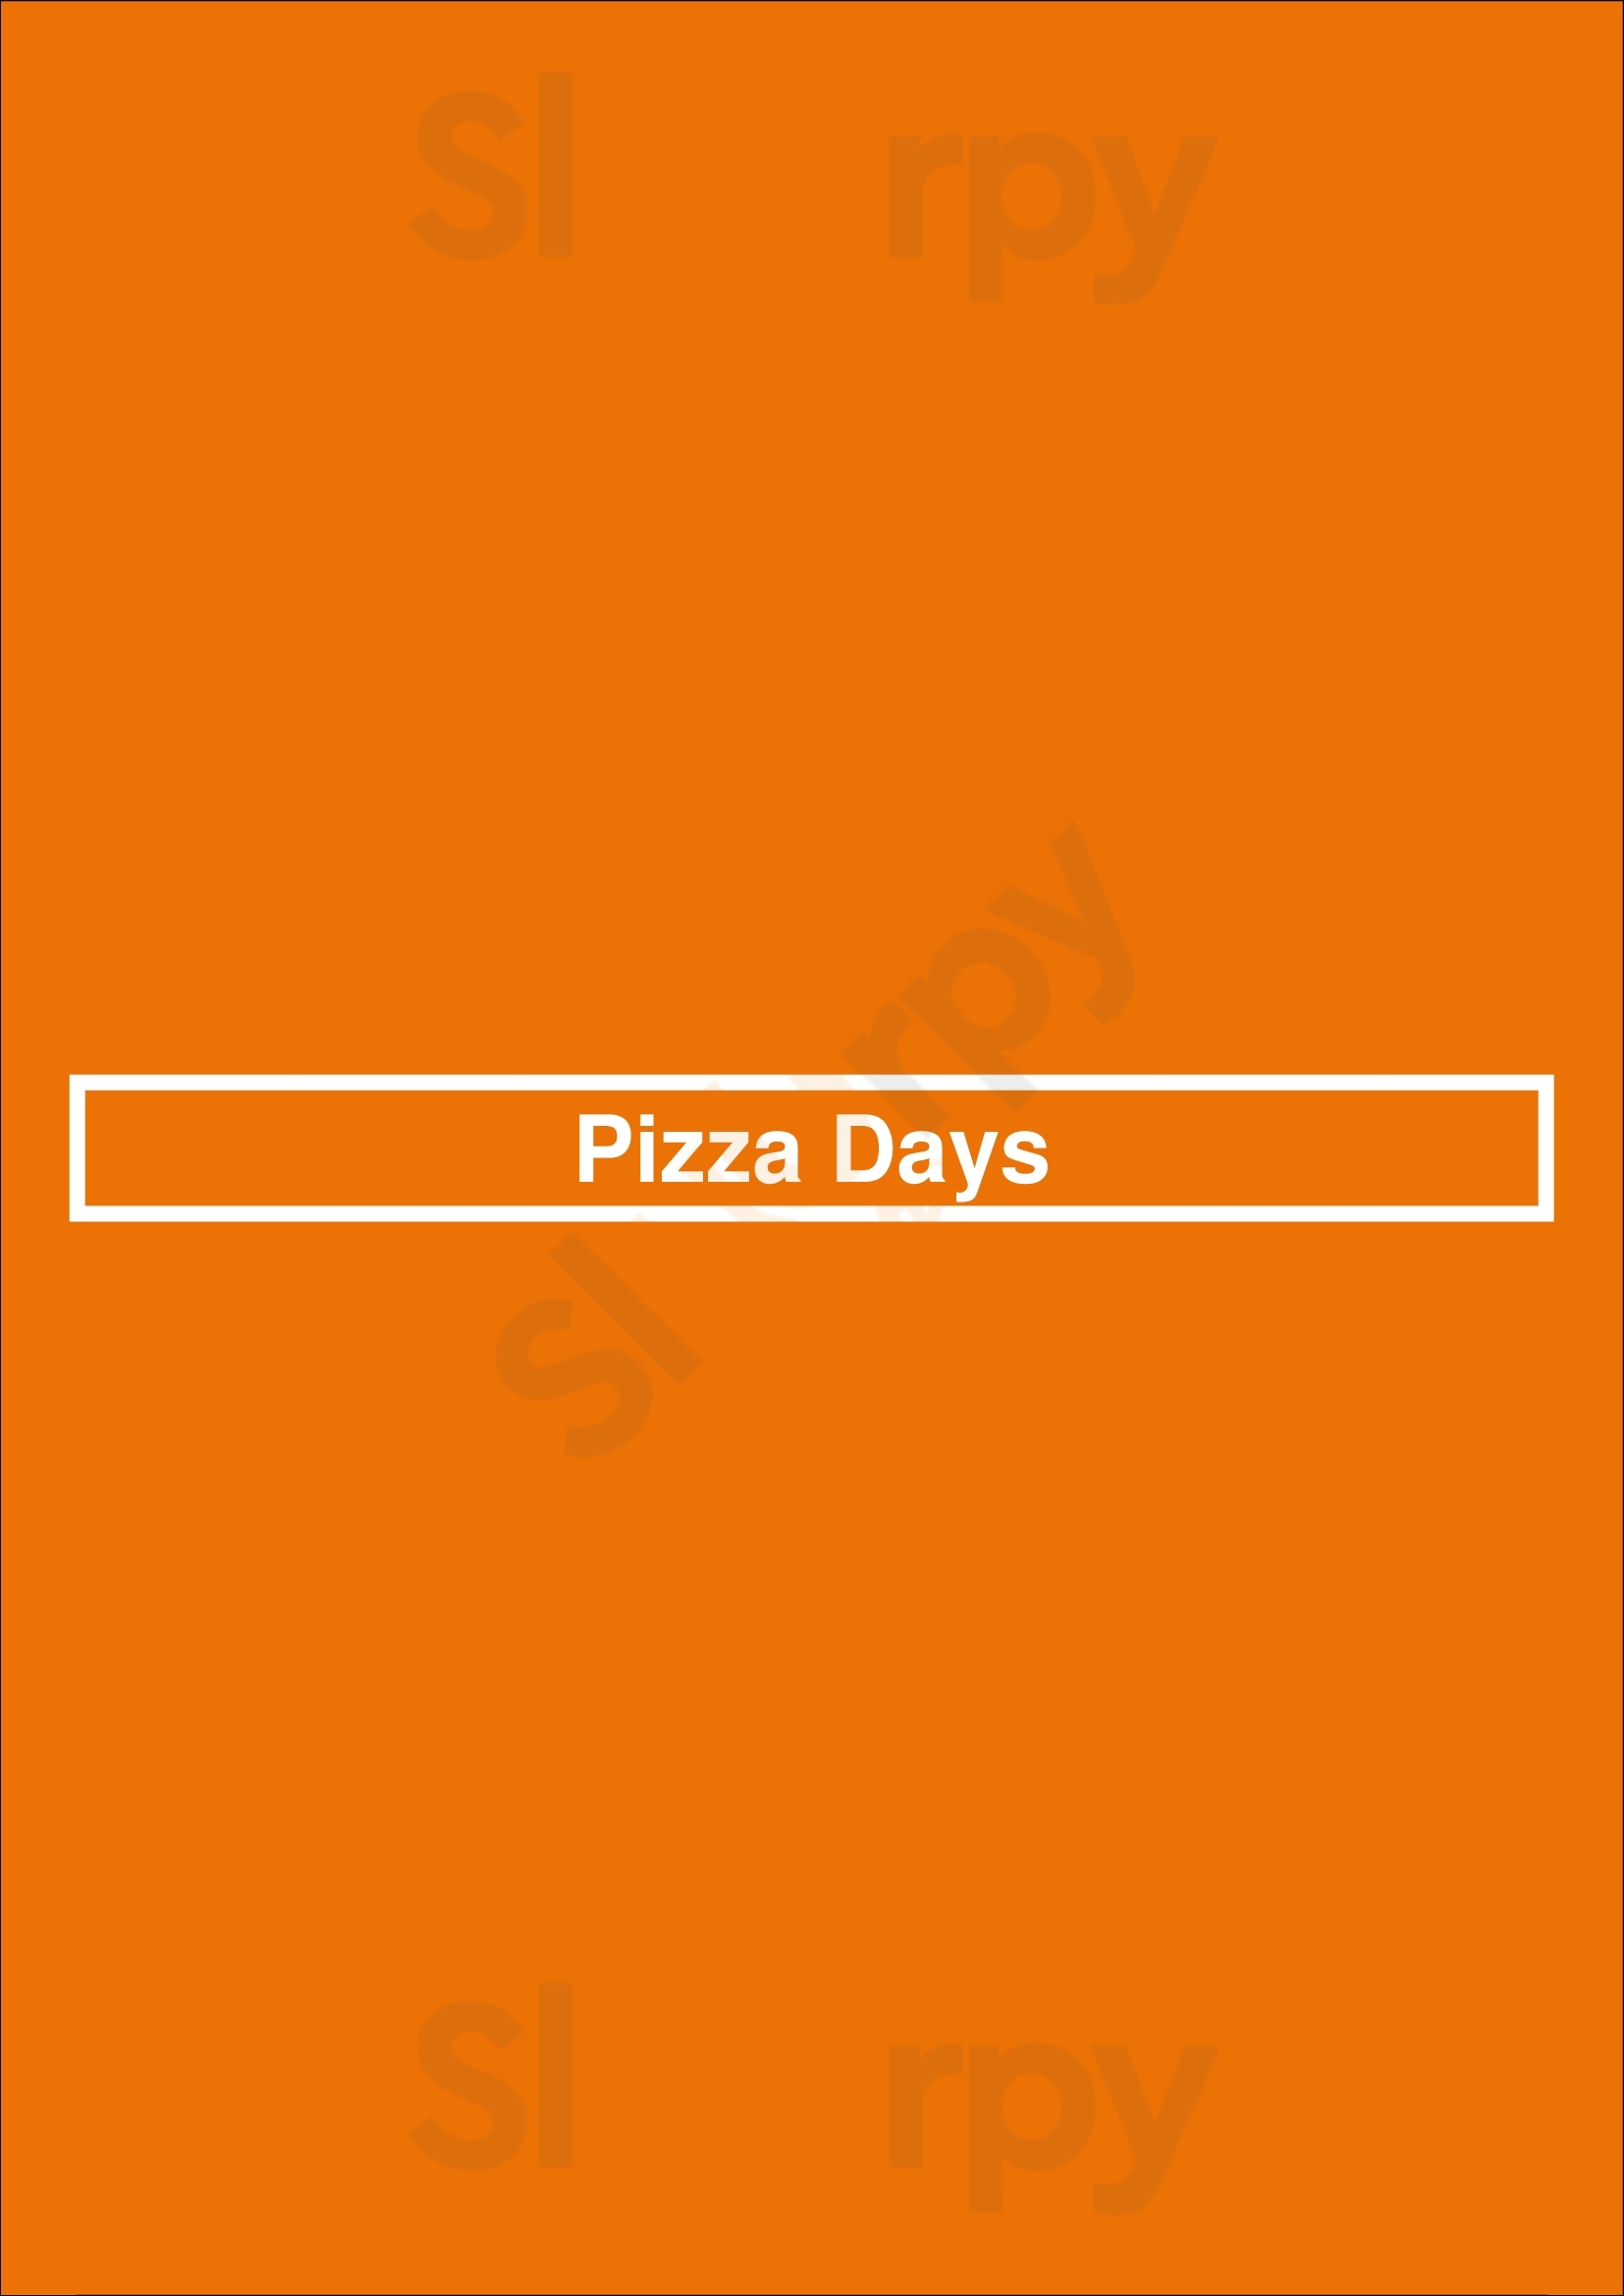 Pizza Days Boston Menu - 1